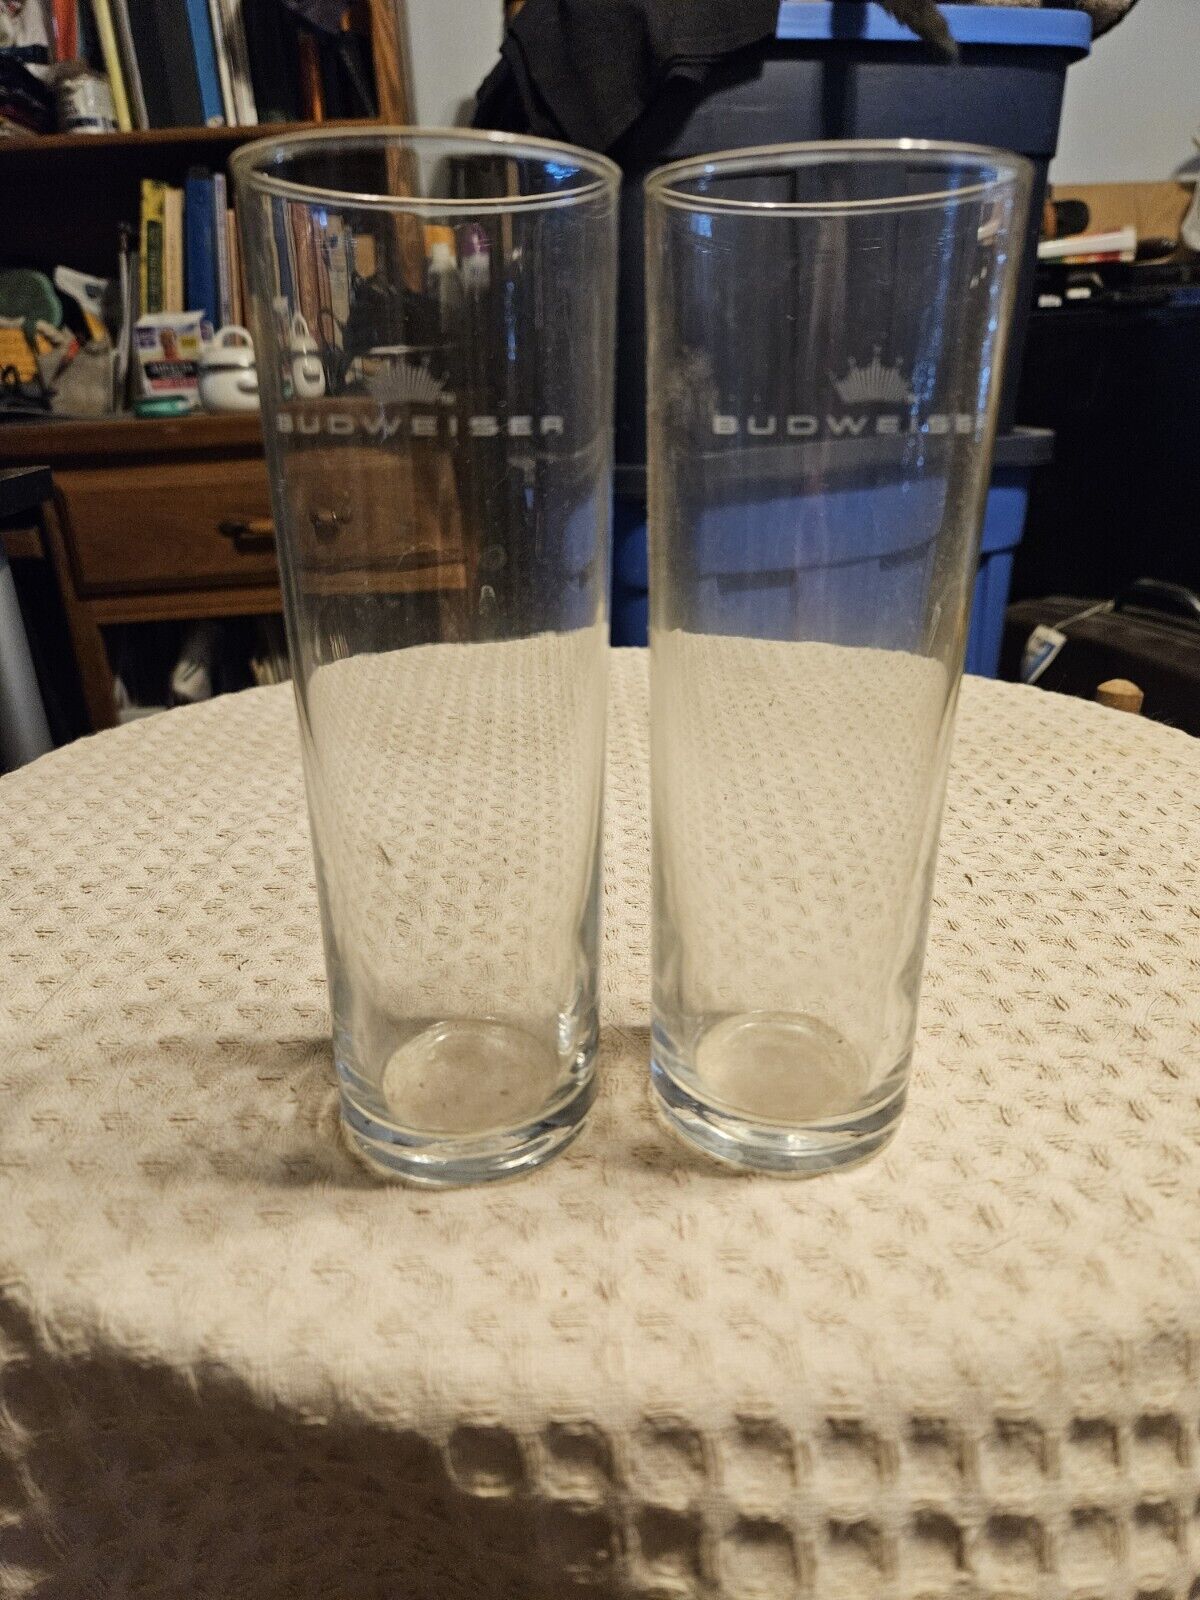 Matching Bubweiser Highball Glasses